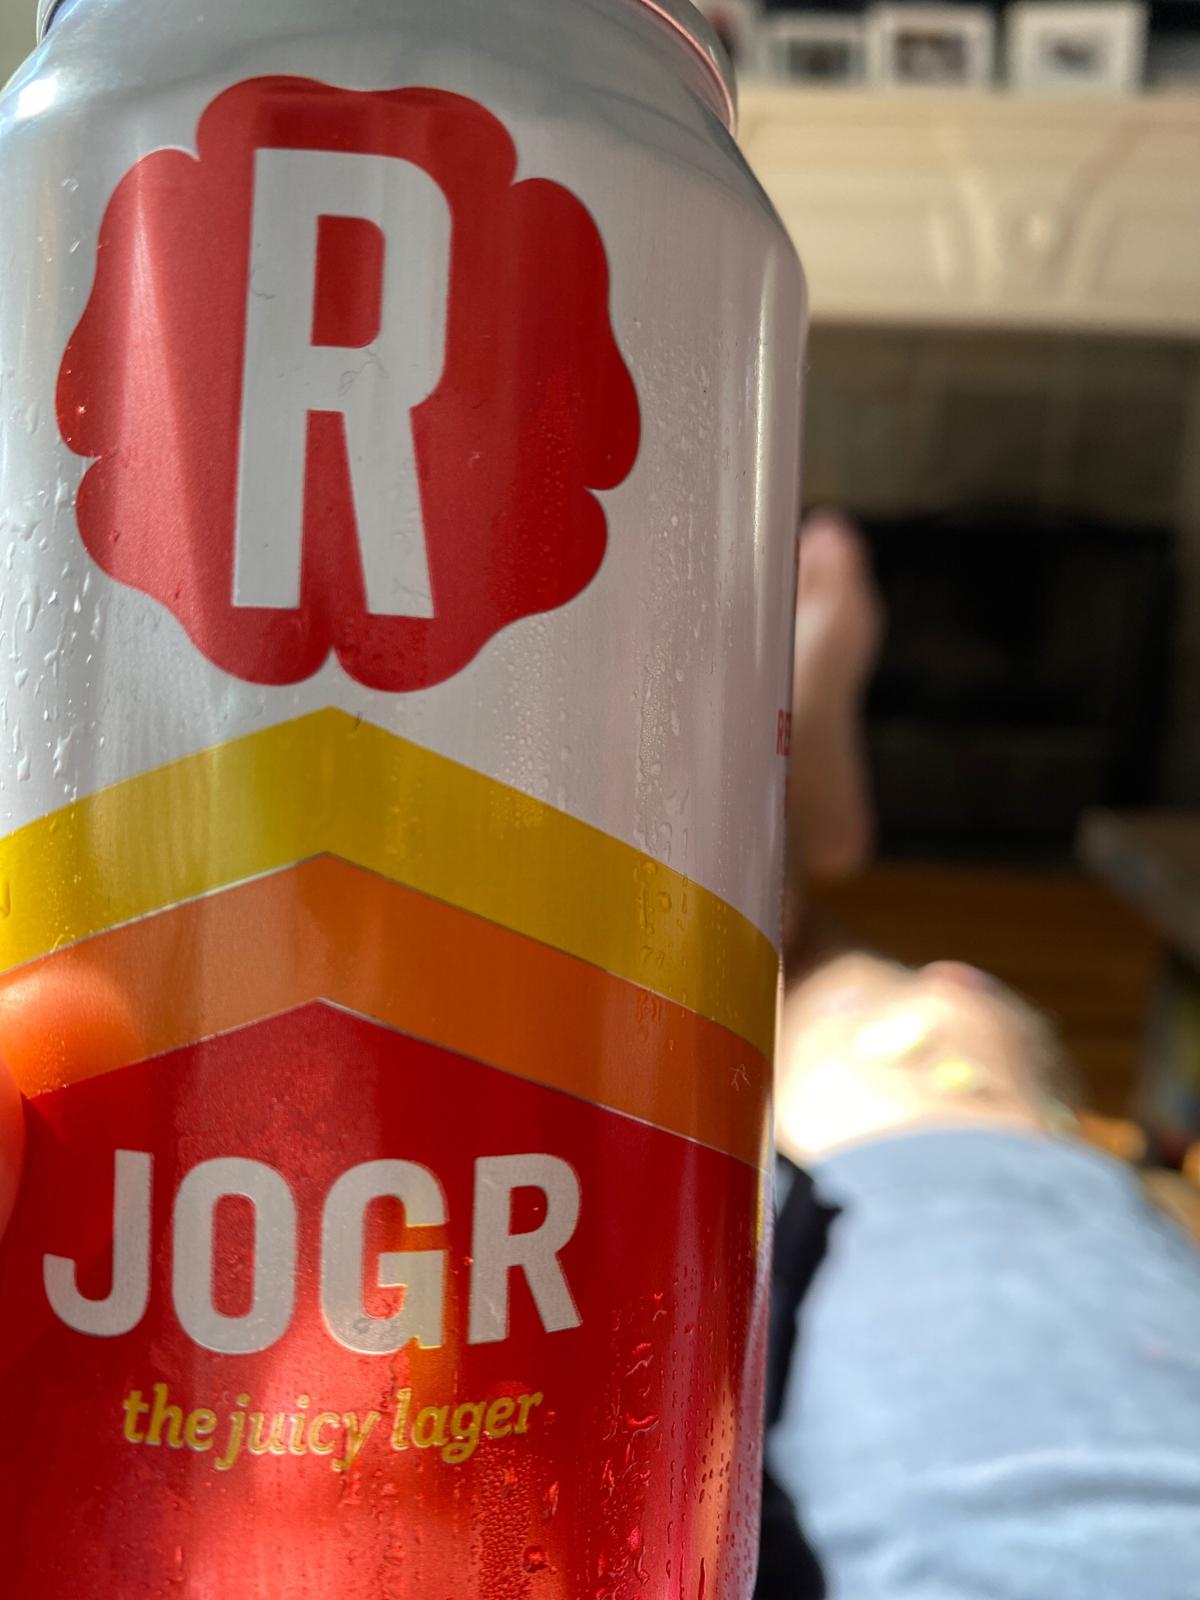 JOGR - Juicy Lager